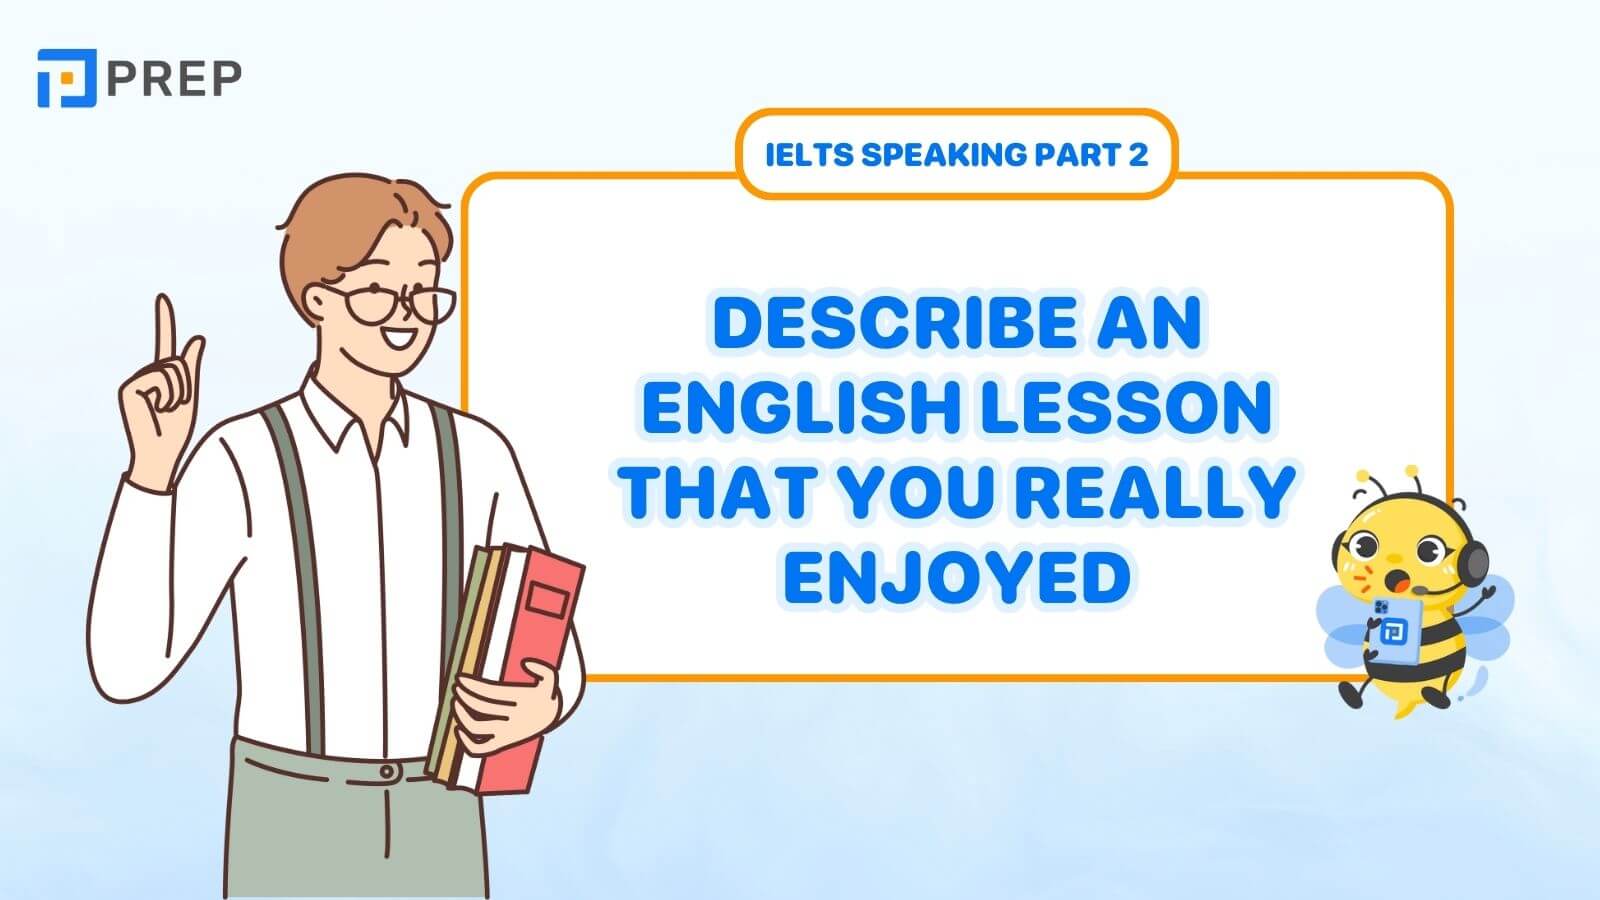 Describe an English lesson that you really enjoyed